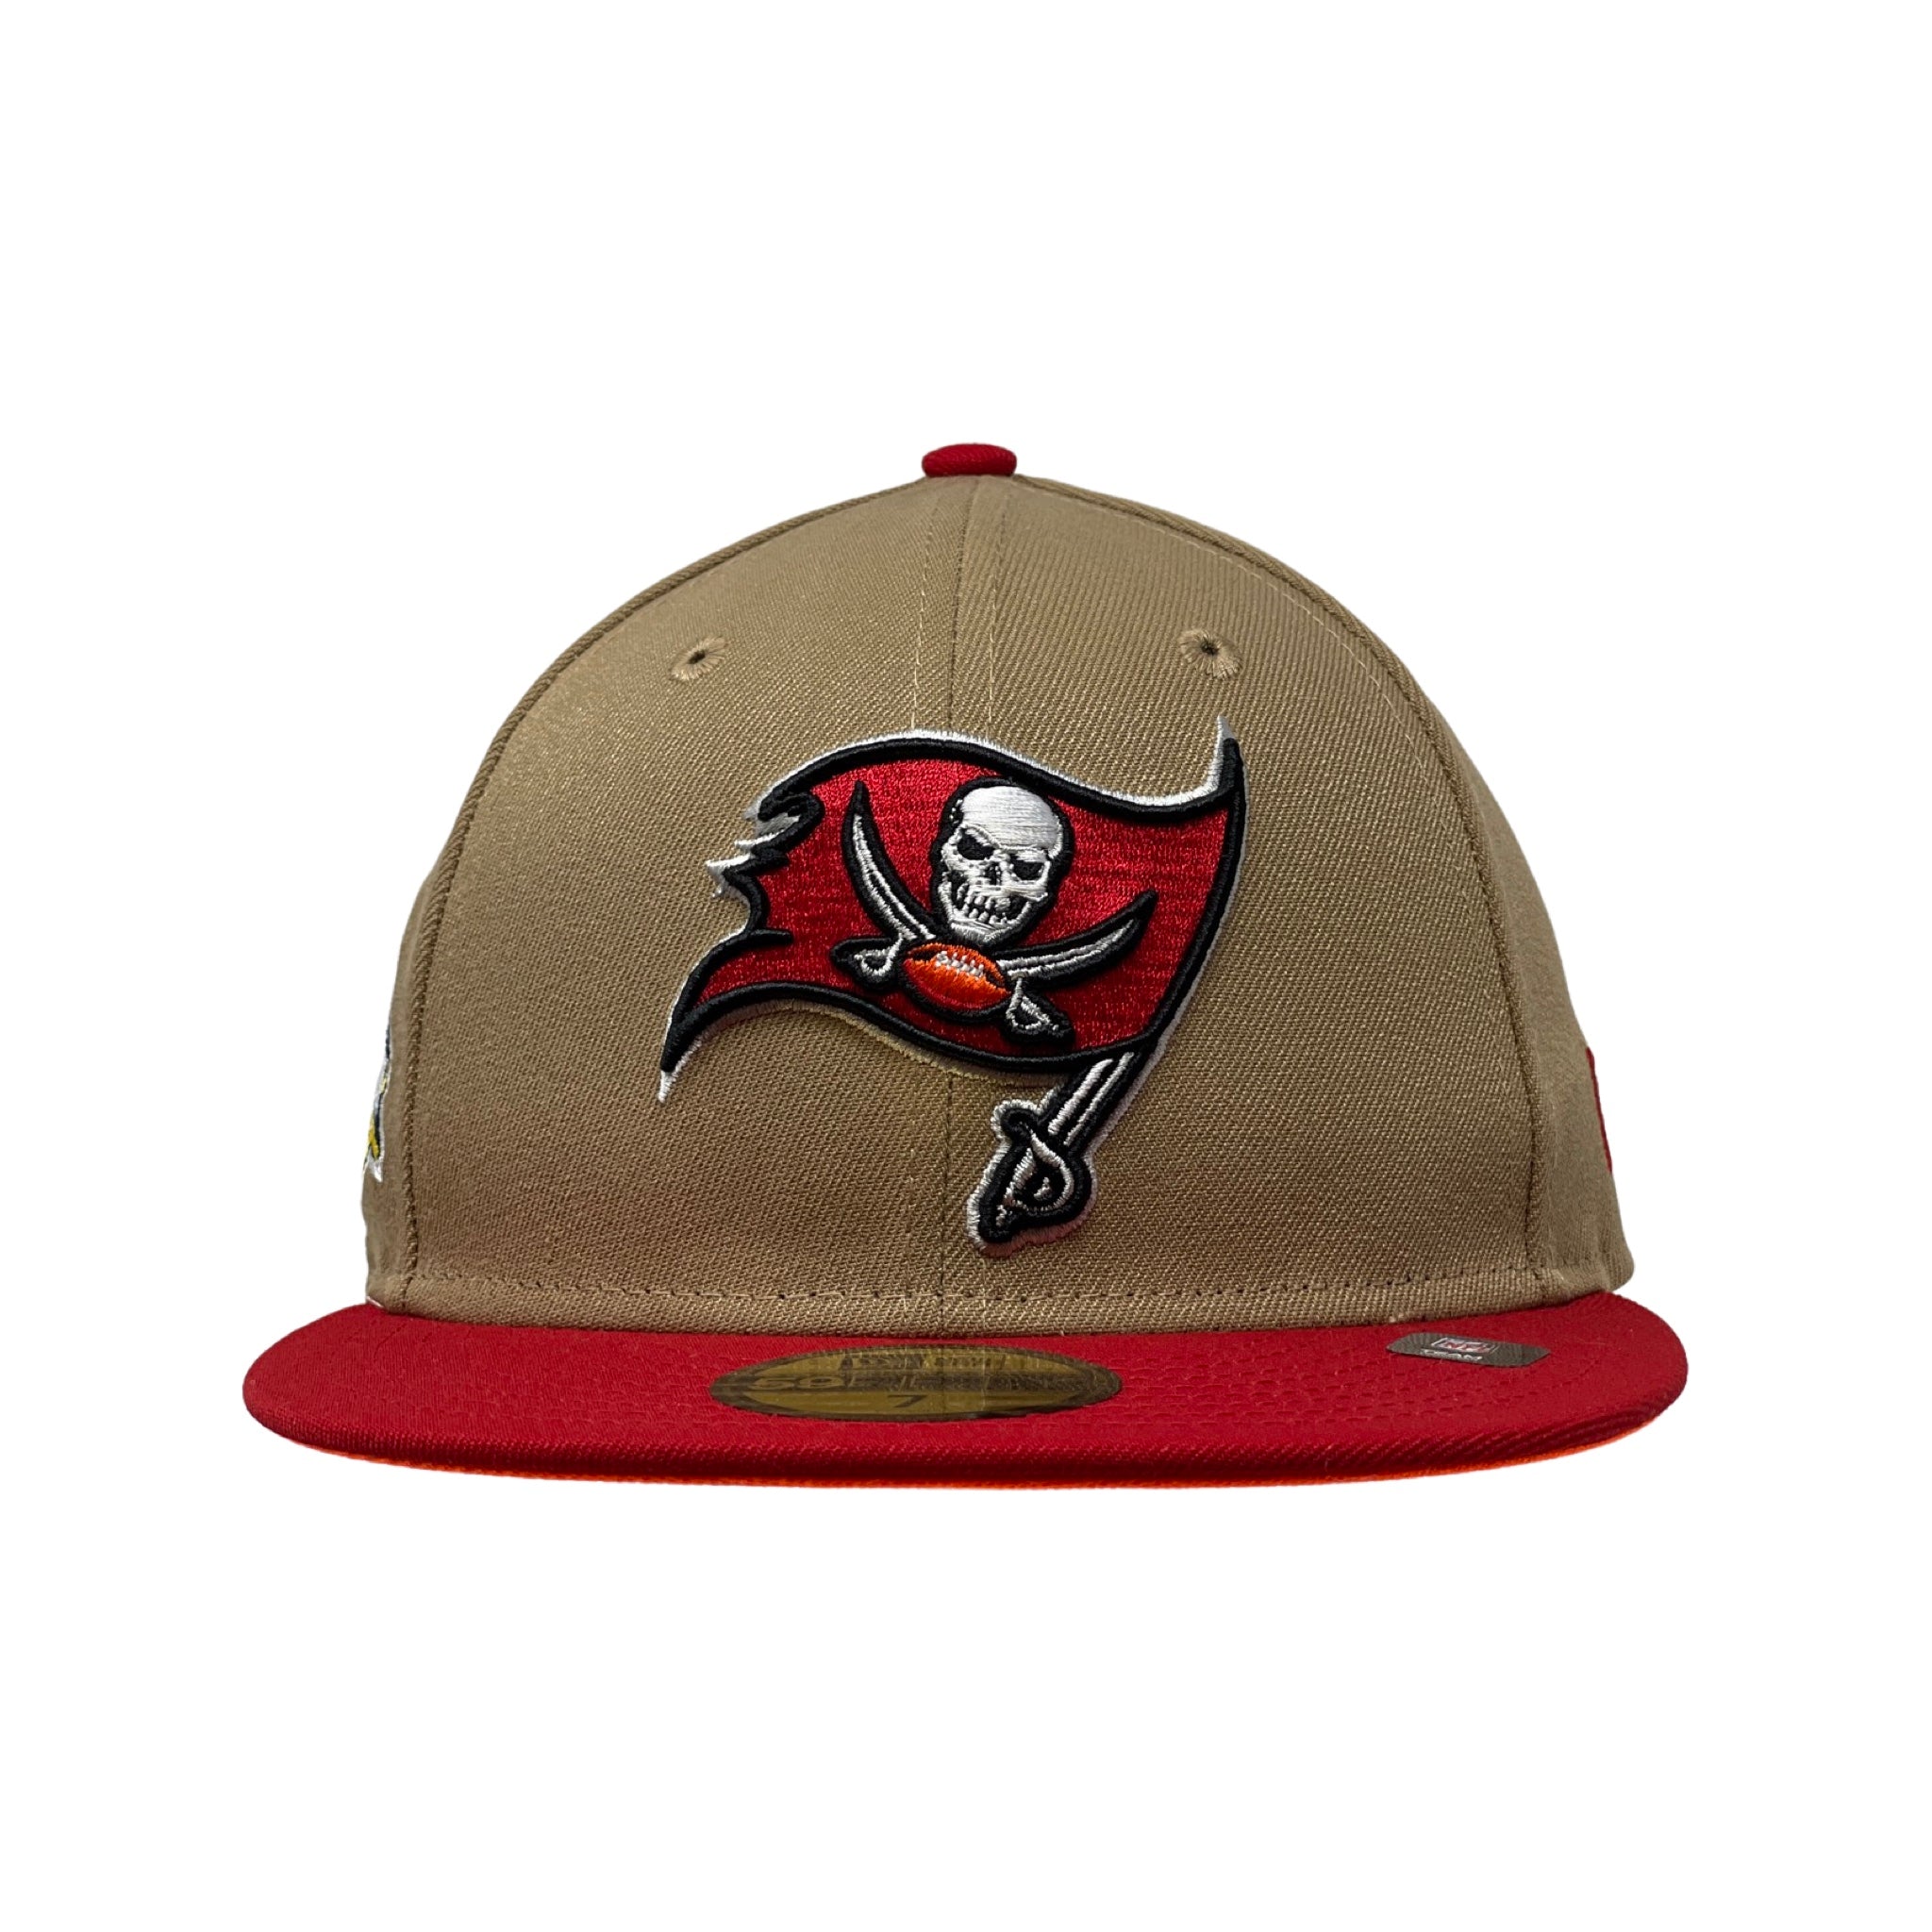 New Era Hat - Tamapa Bay Buccaneers - Khaki / Red